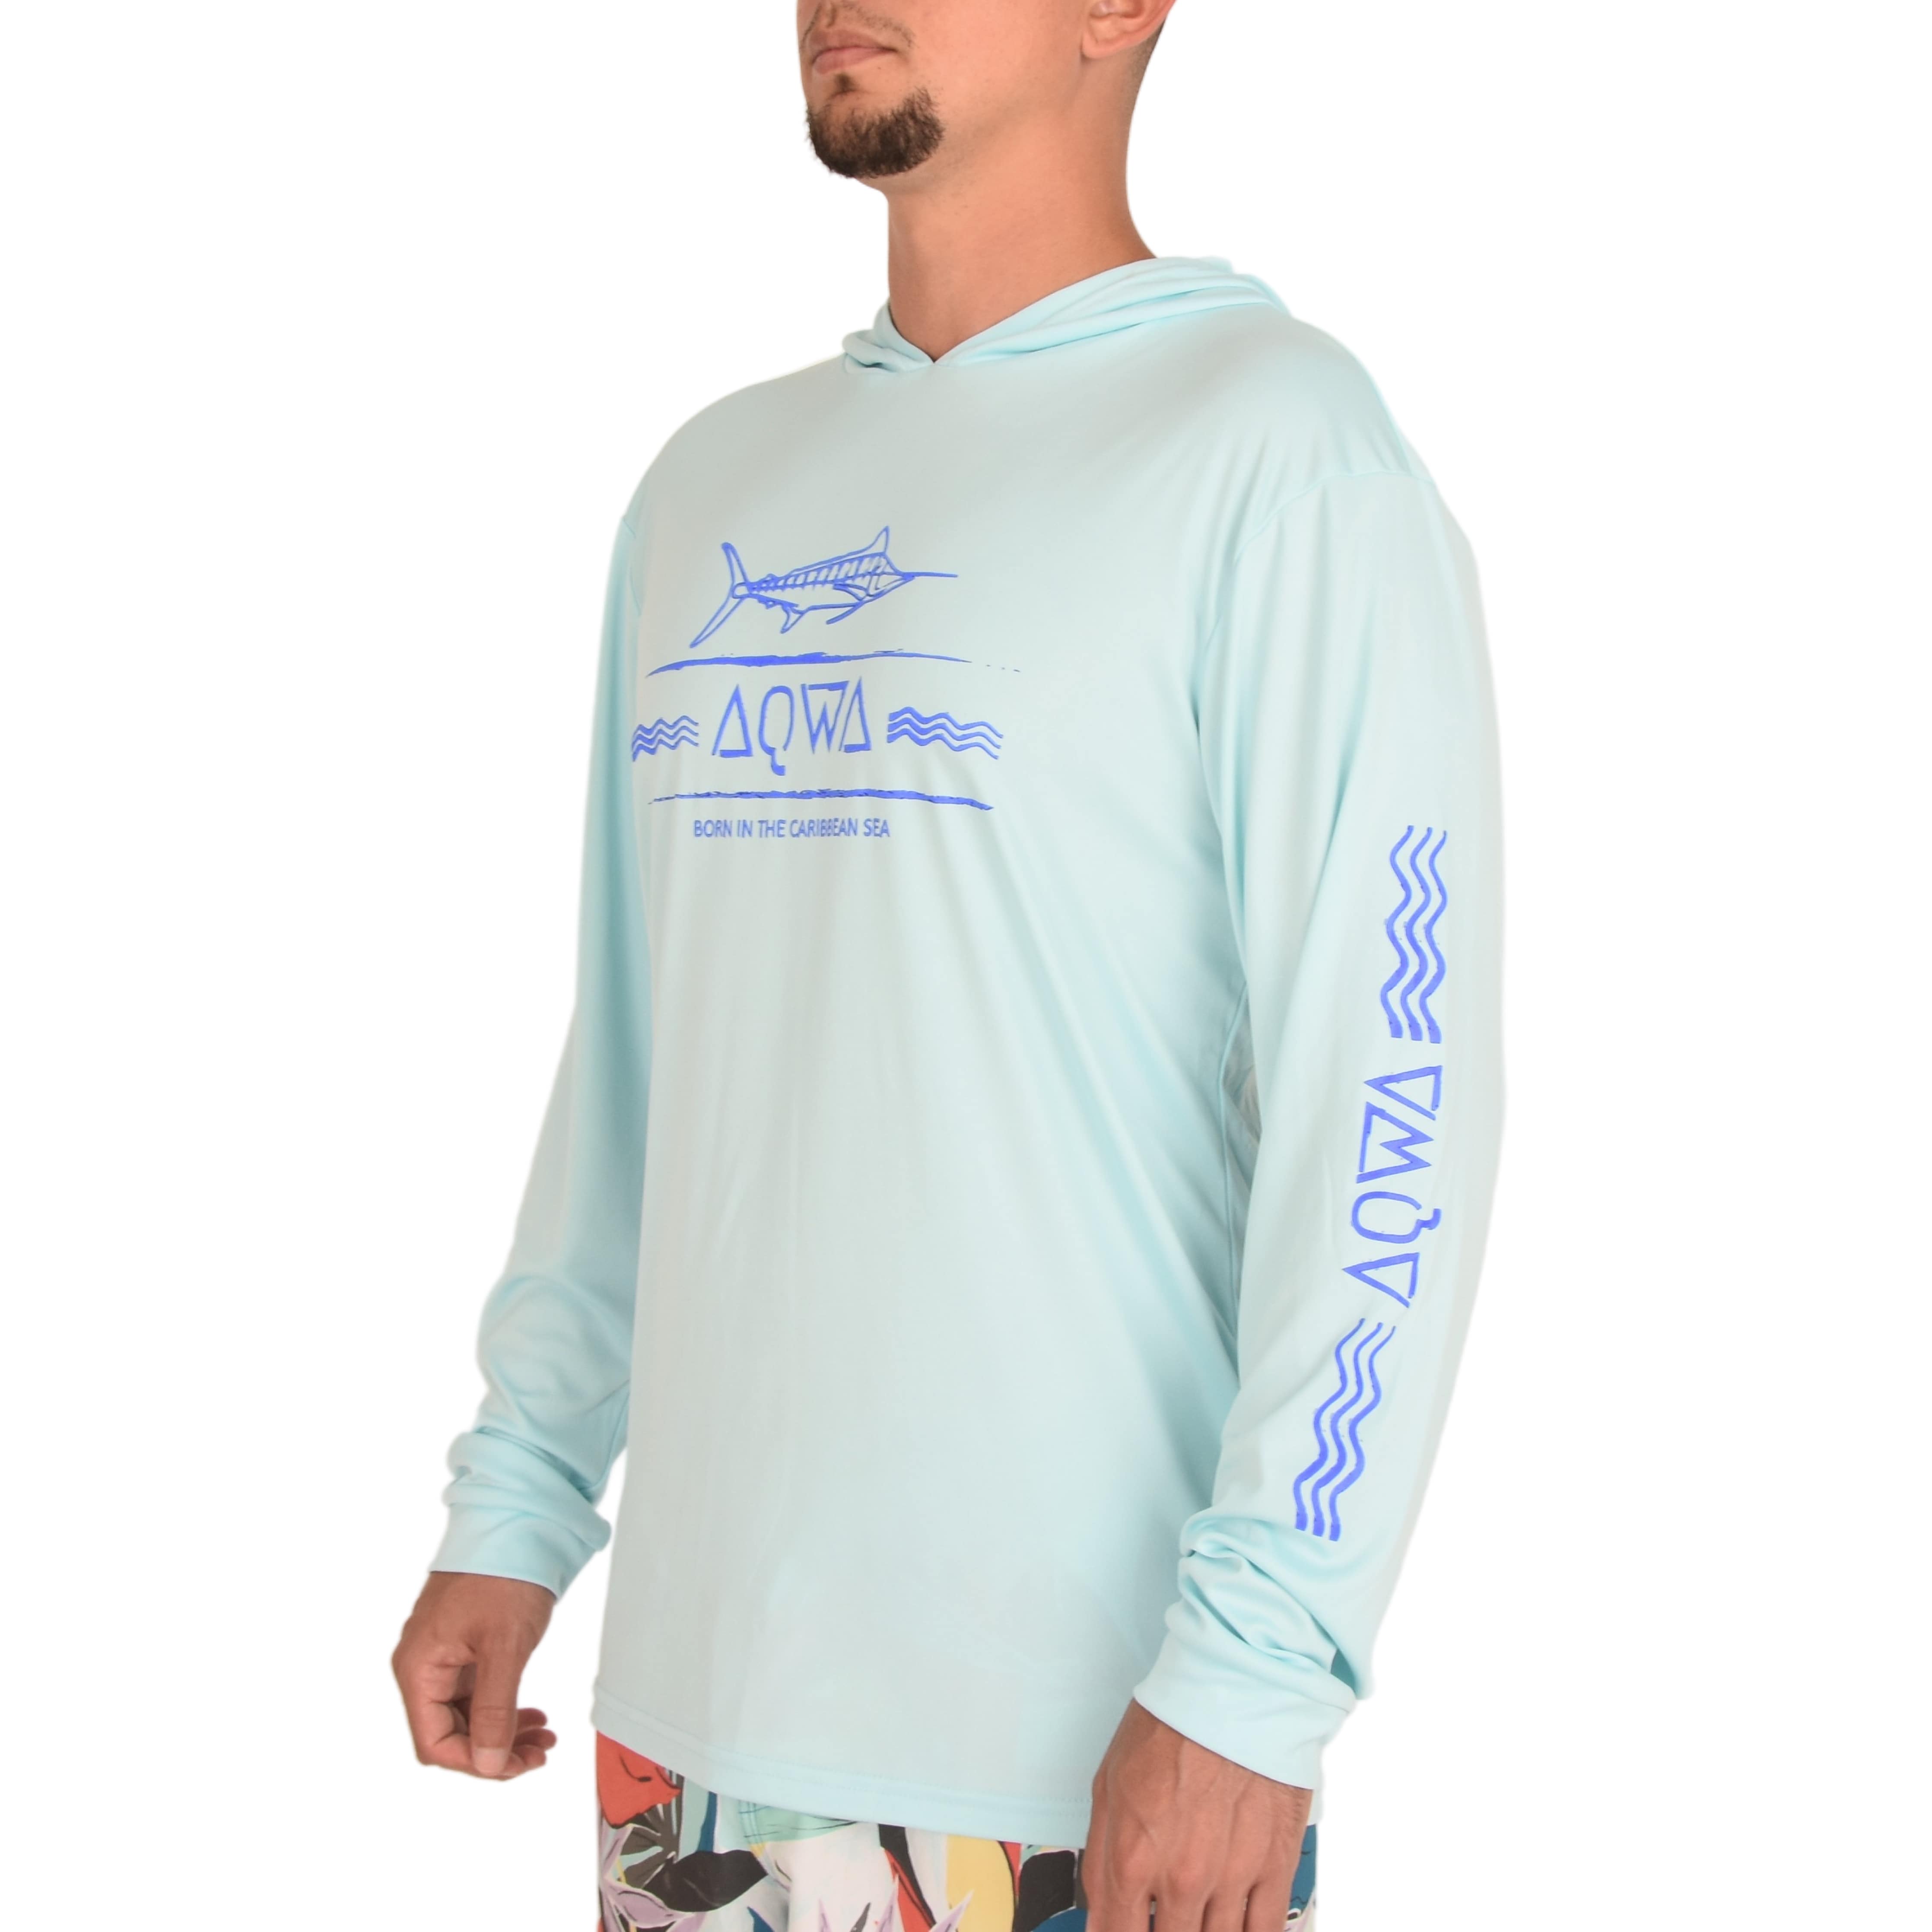 Men’s Long Sleeve Hooded Fishing Jersey : Blue/Aqua